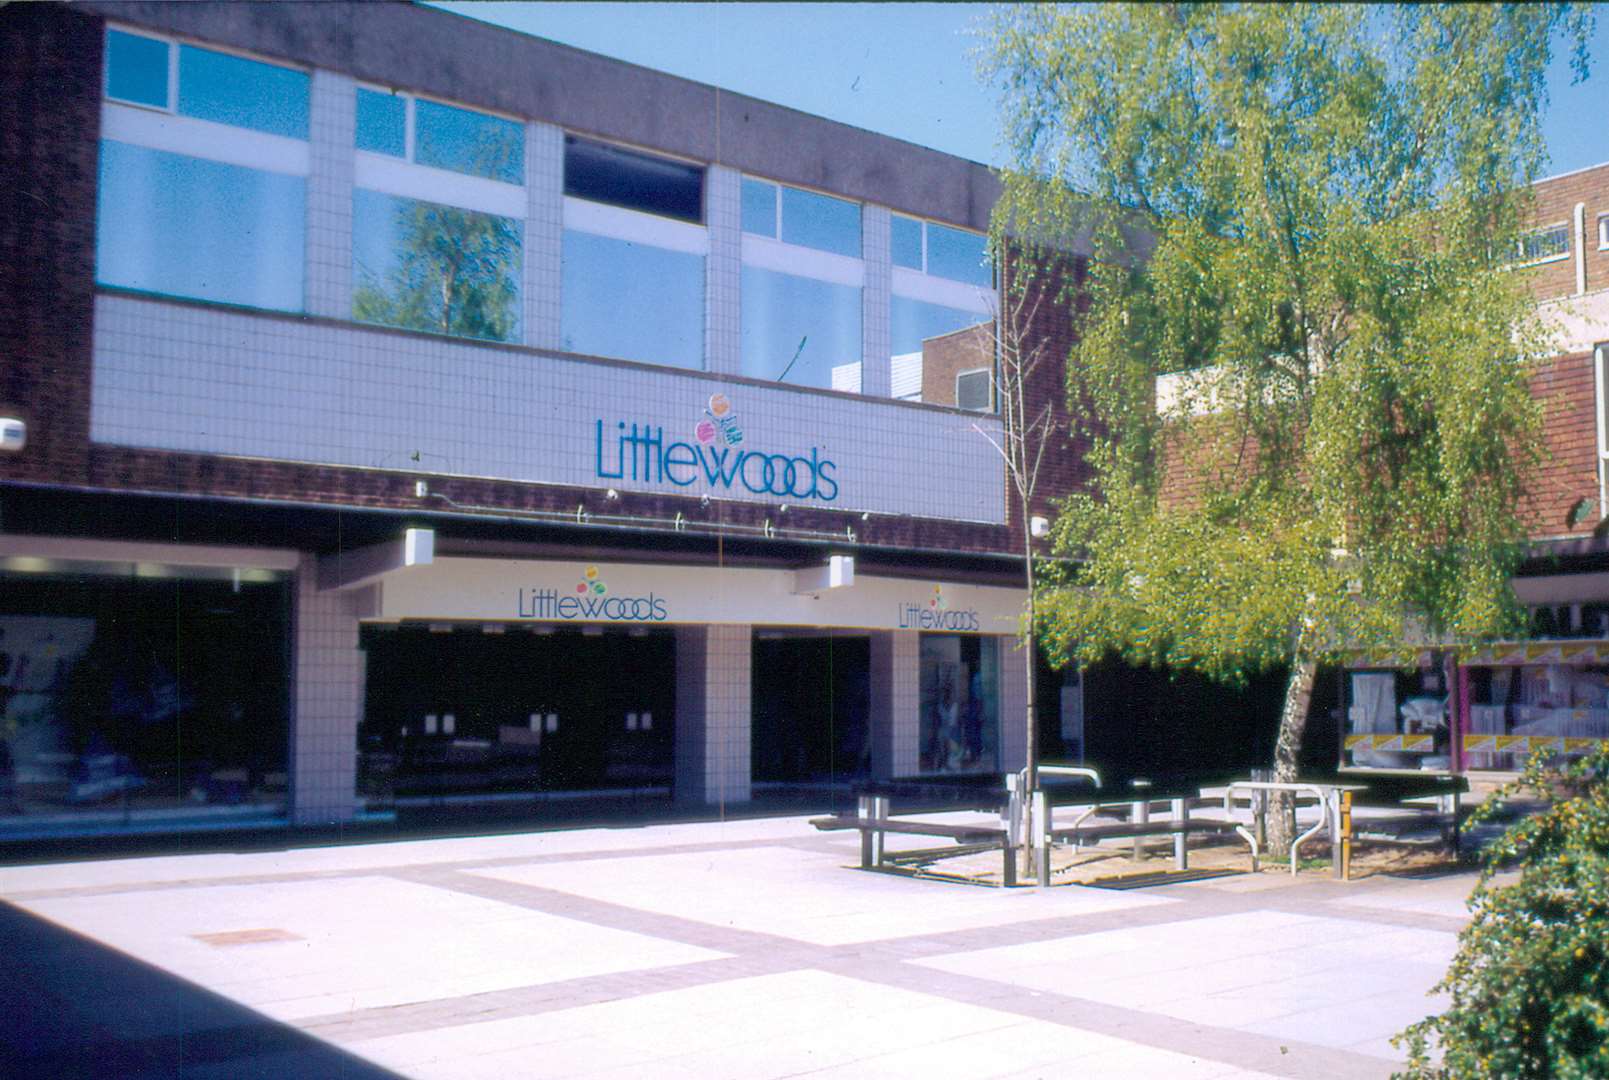 Ashford's former Littlewoods store became the BHS premises